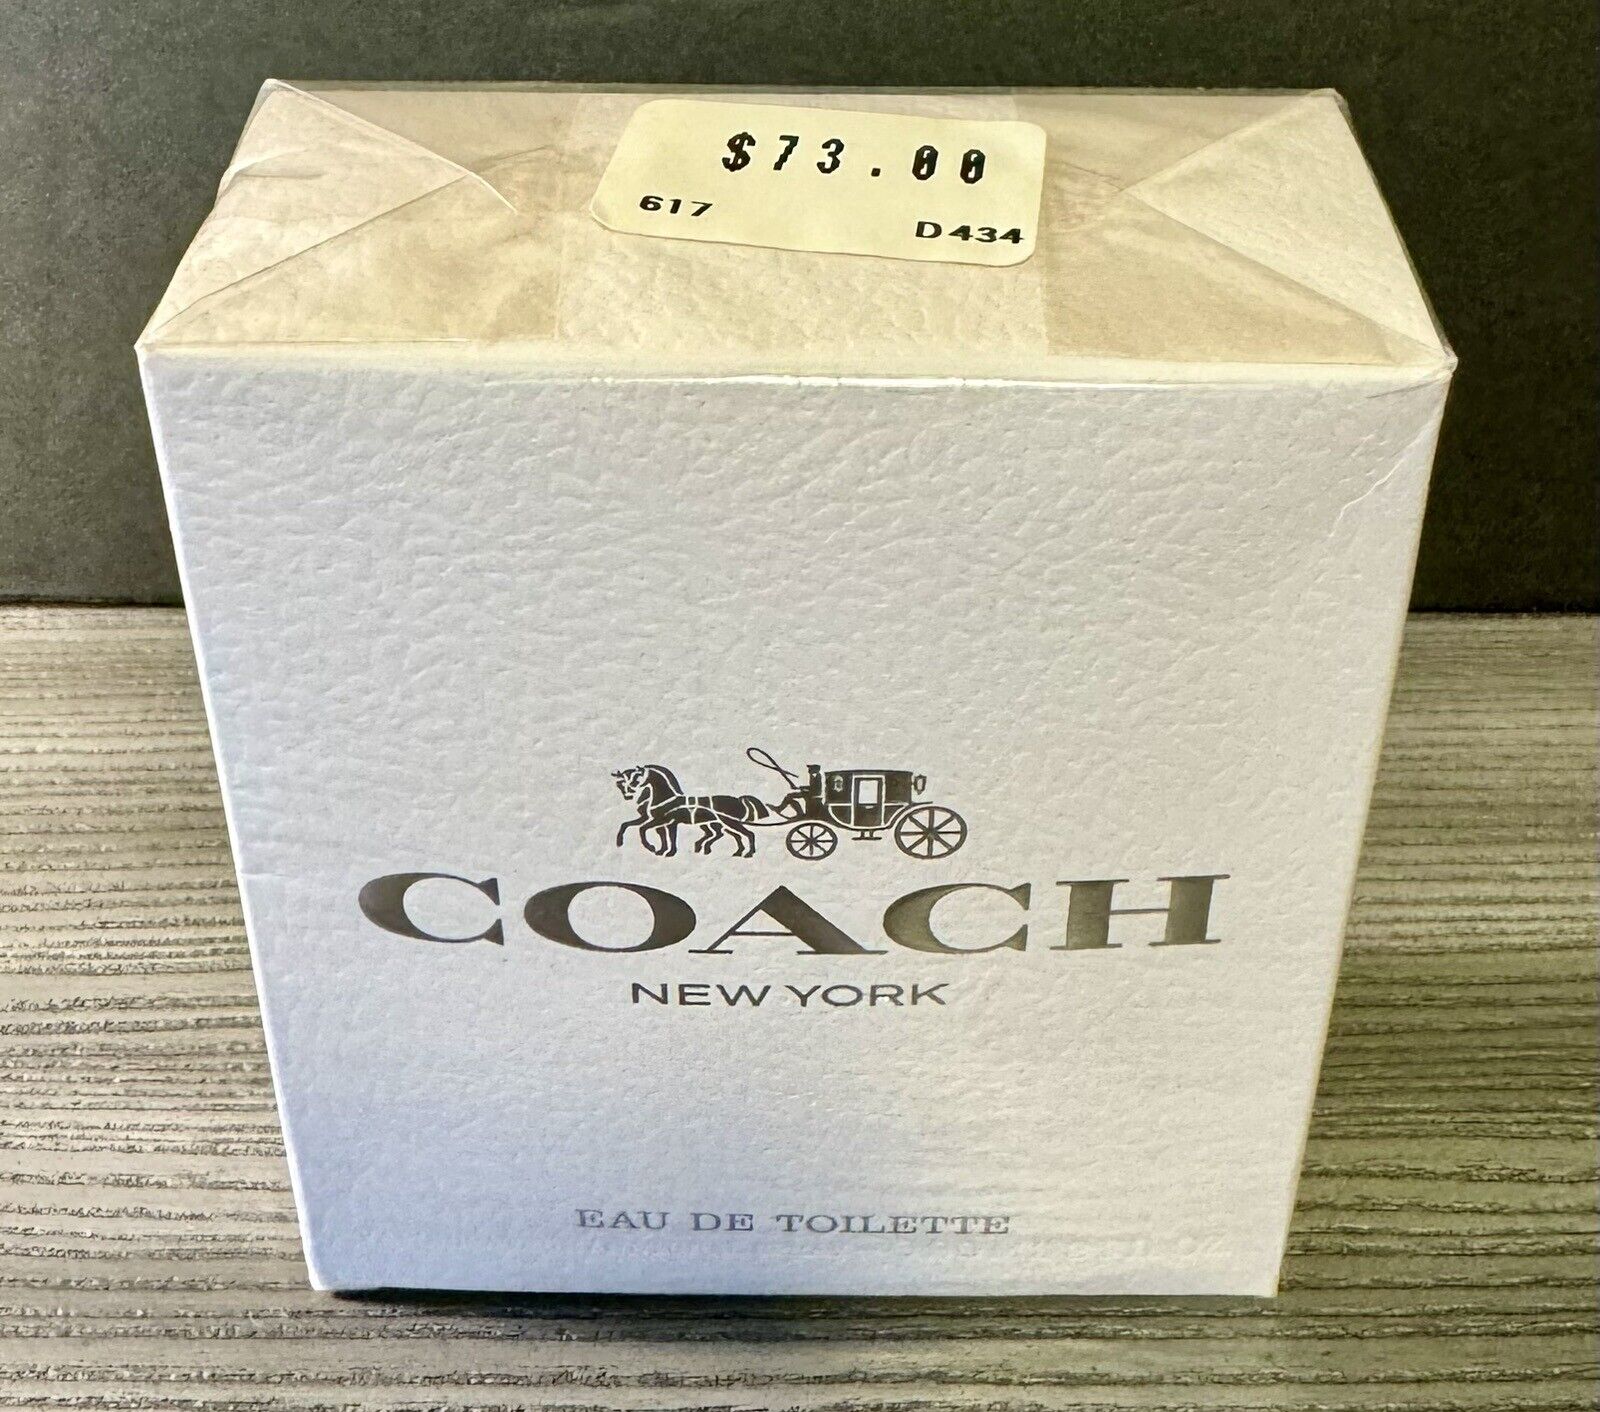 Coach New York Eau De Toilette Parfum Spray Perfume for Women 3 oz - Brand New